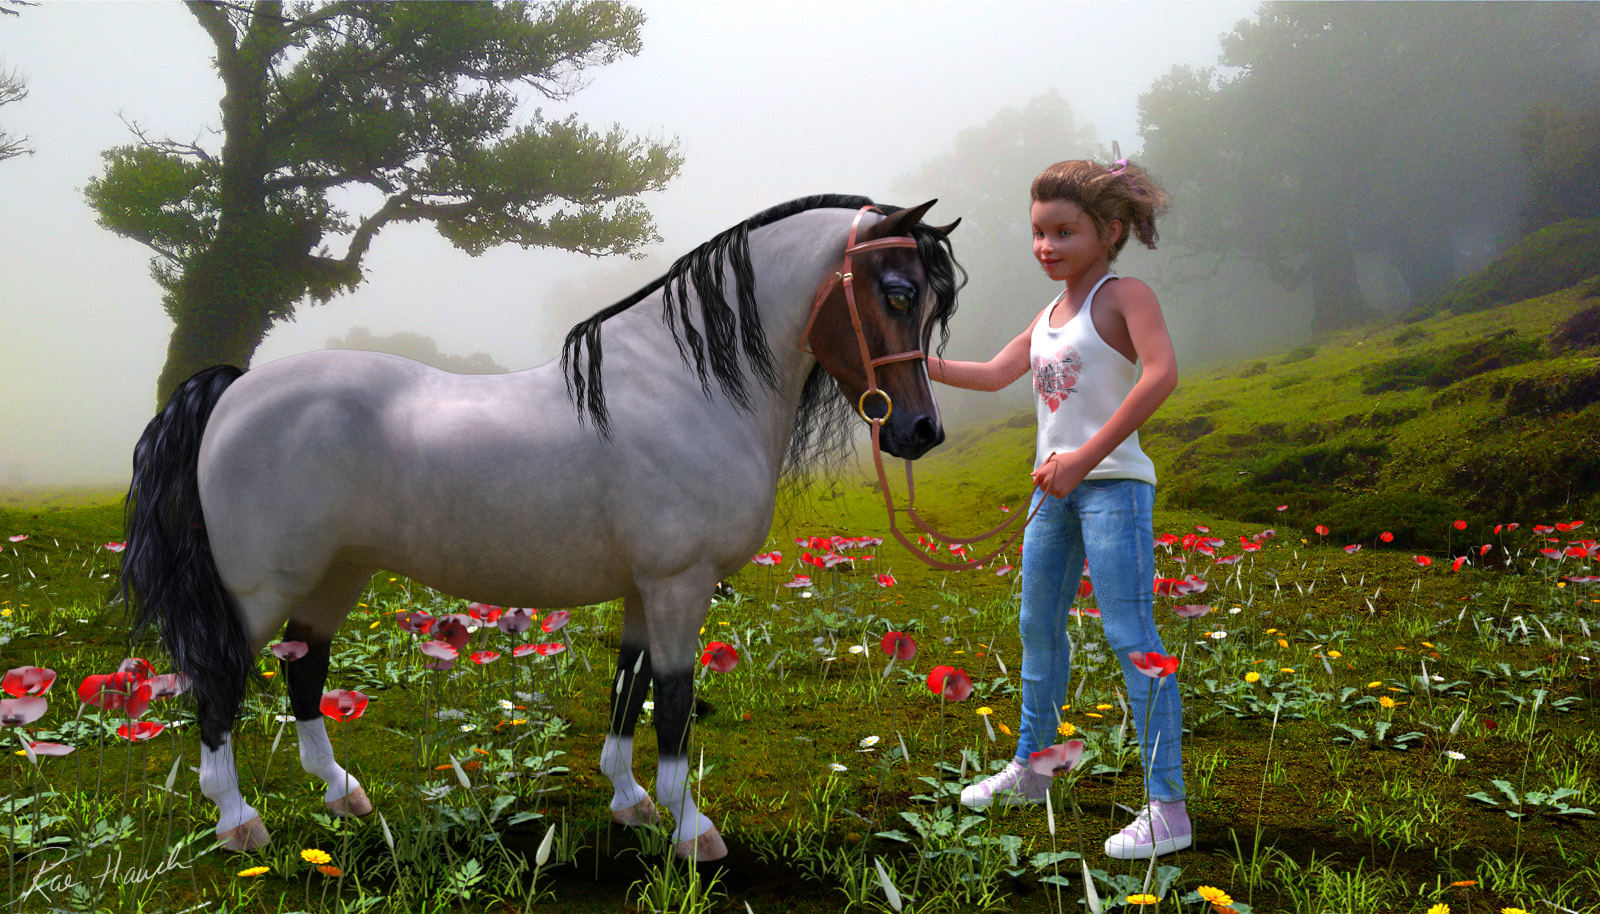 Skylar and her pony